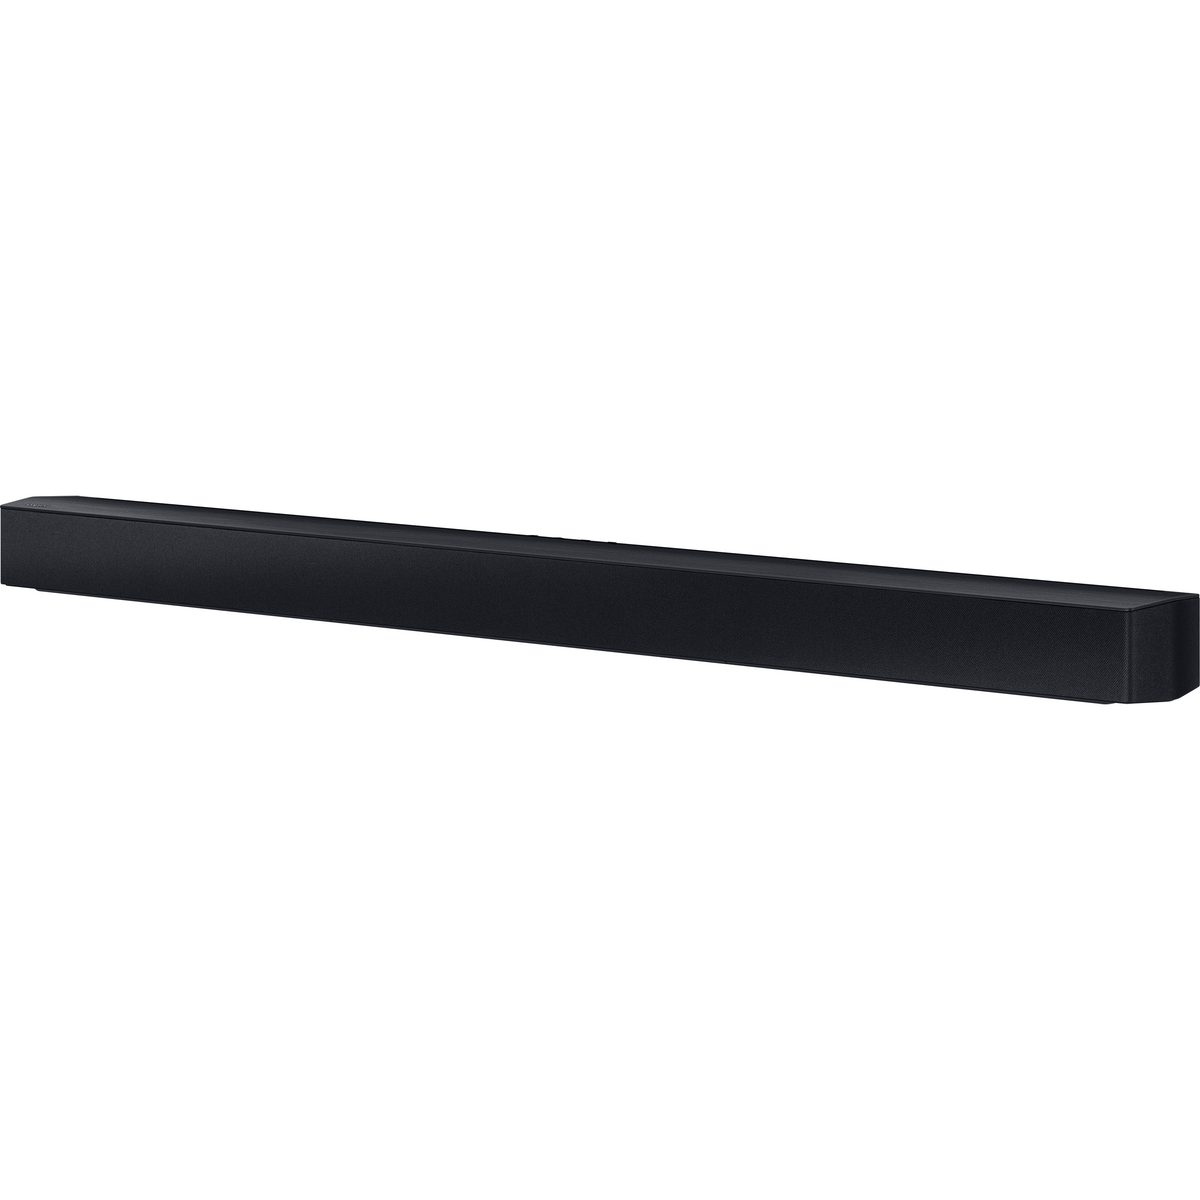 Samsung C450 2.1ch 300W Soundbar with Wireless Subwoofer - Black | HW-C450/XU from Samsung - DID Electrical